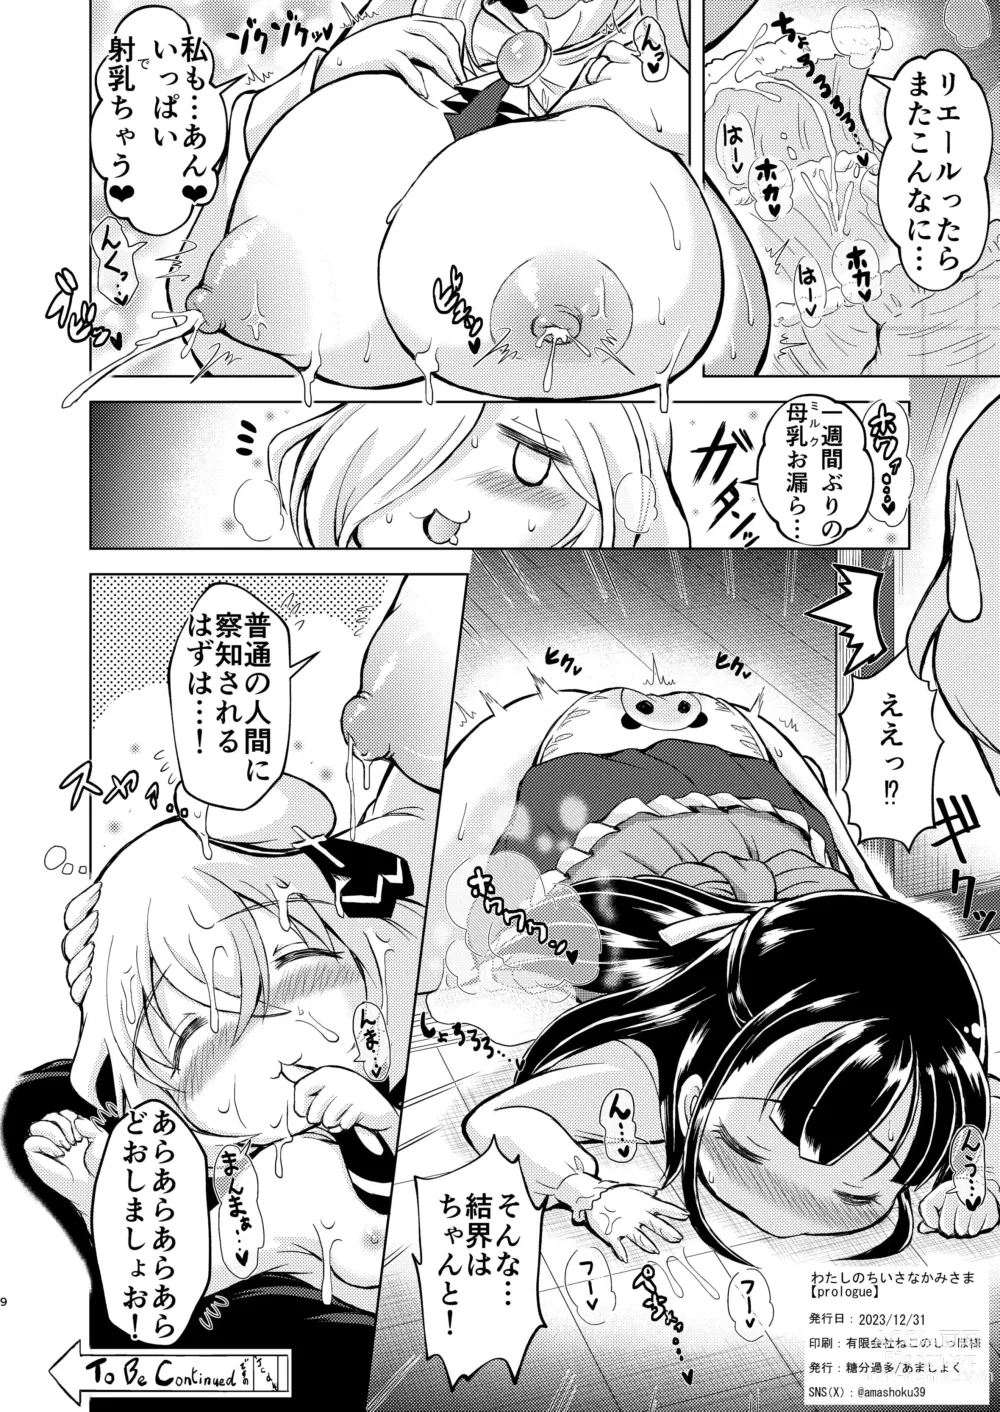 Page 9 of doujinshi Watashi no Chiisana Kamisama <prologue>